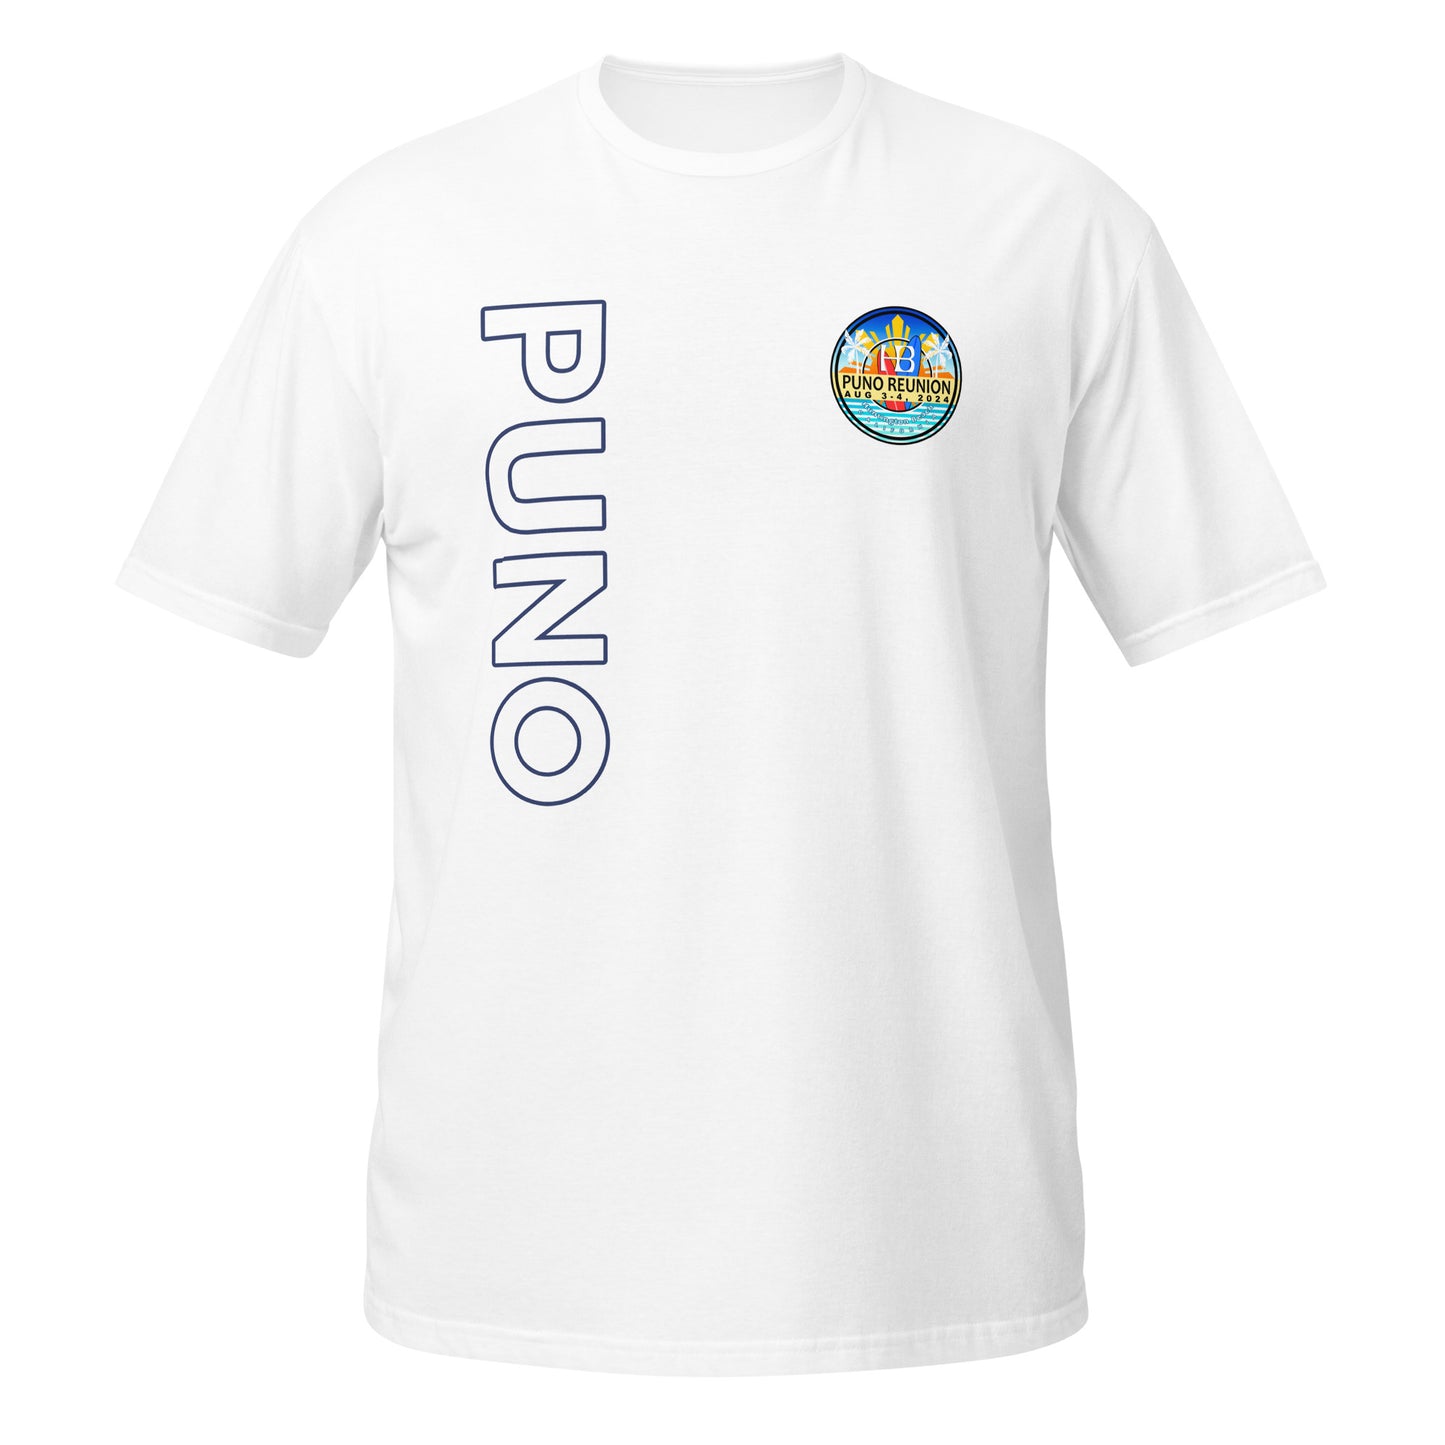 PUNO REUNION Short-Sleeve Unisex T-Shirt